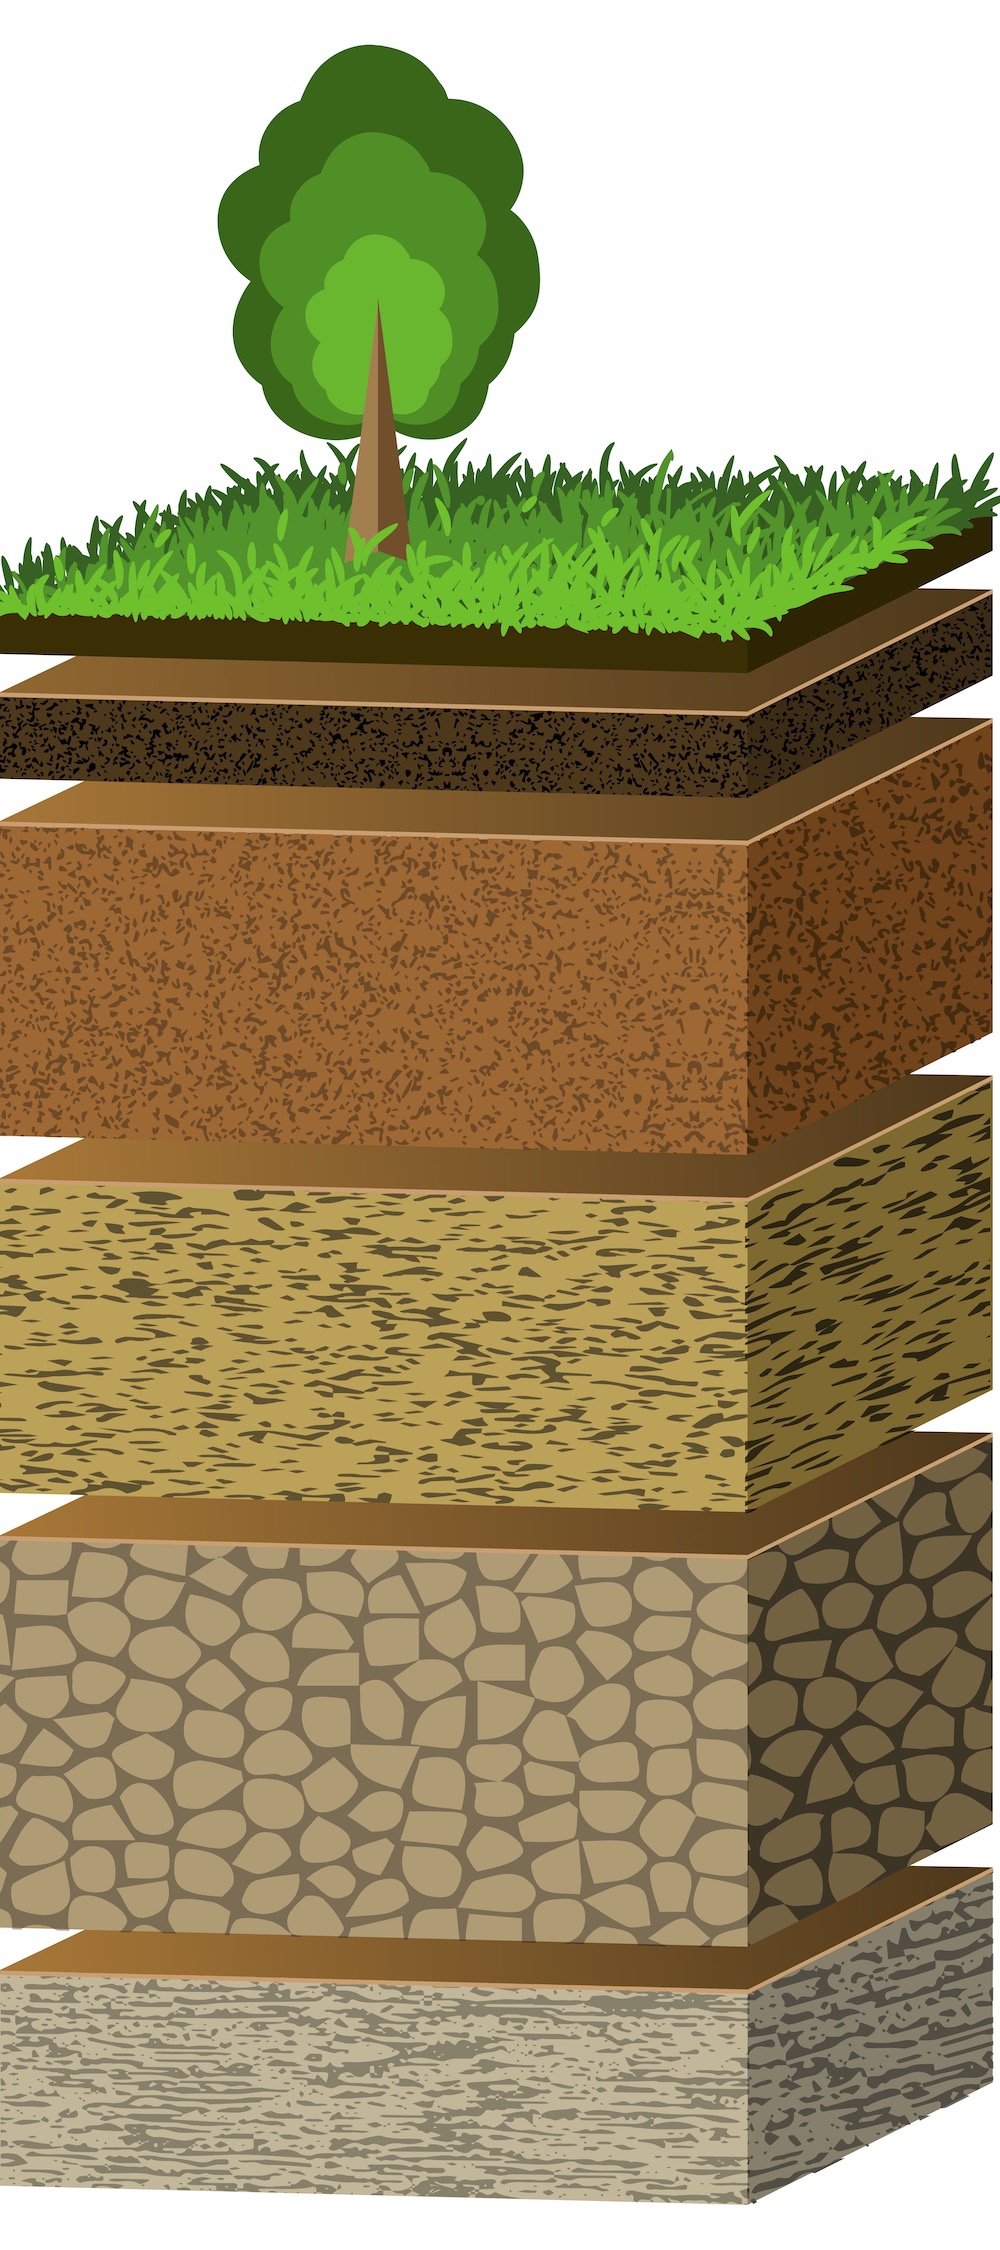 Soil Diagram